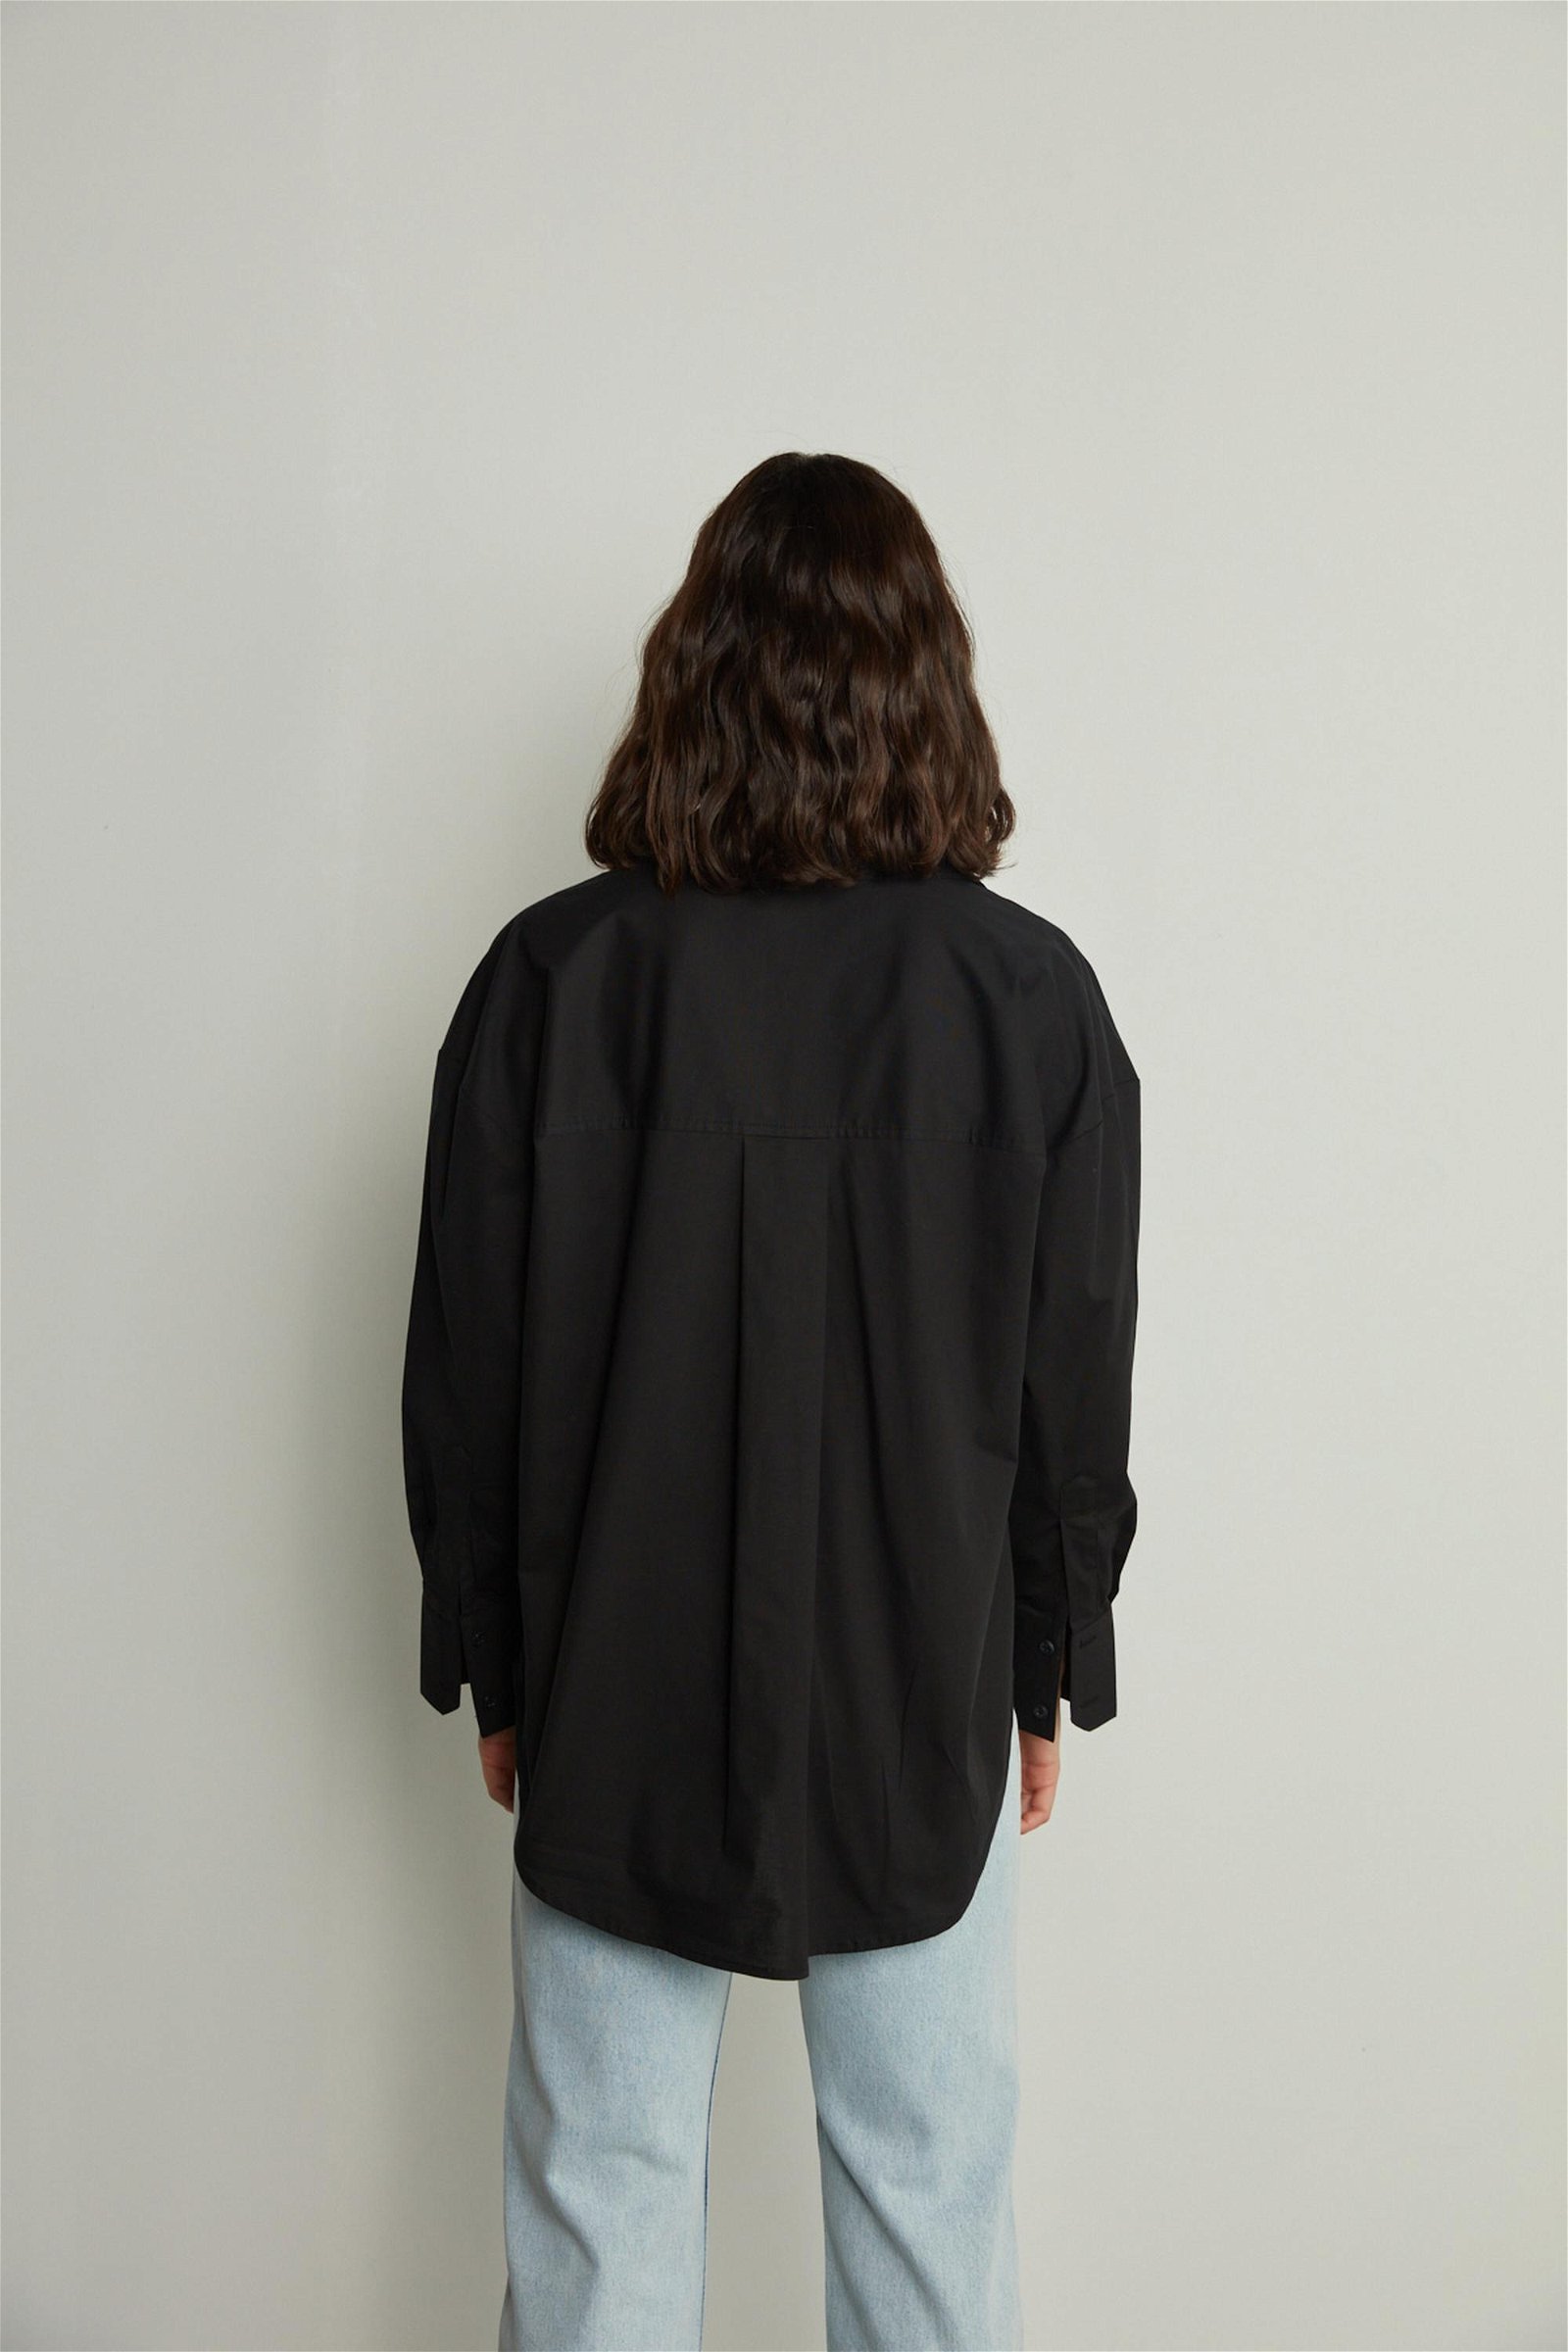 Vatkalı Kadın Oxford Gömlek Siyah Siyah